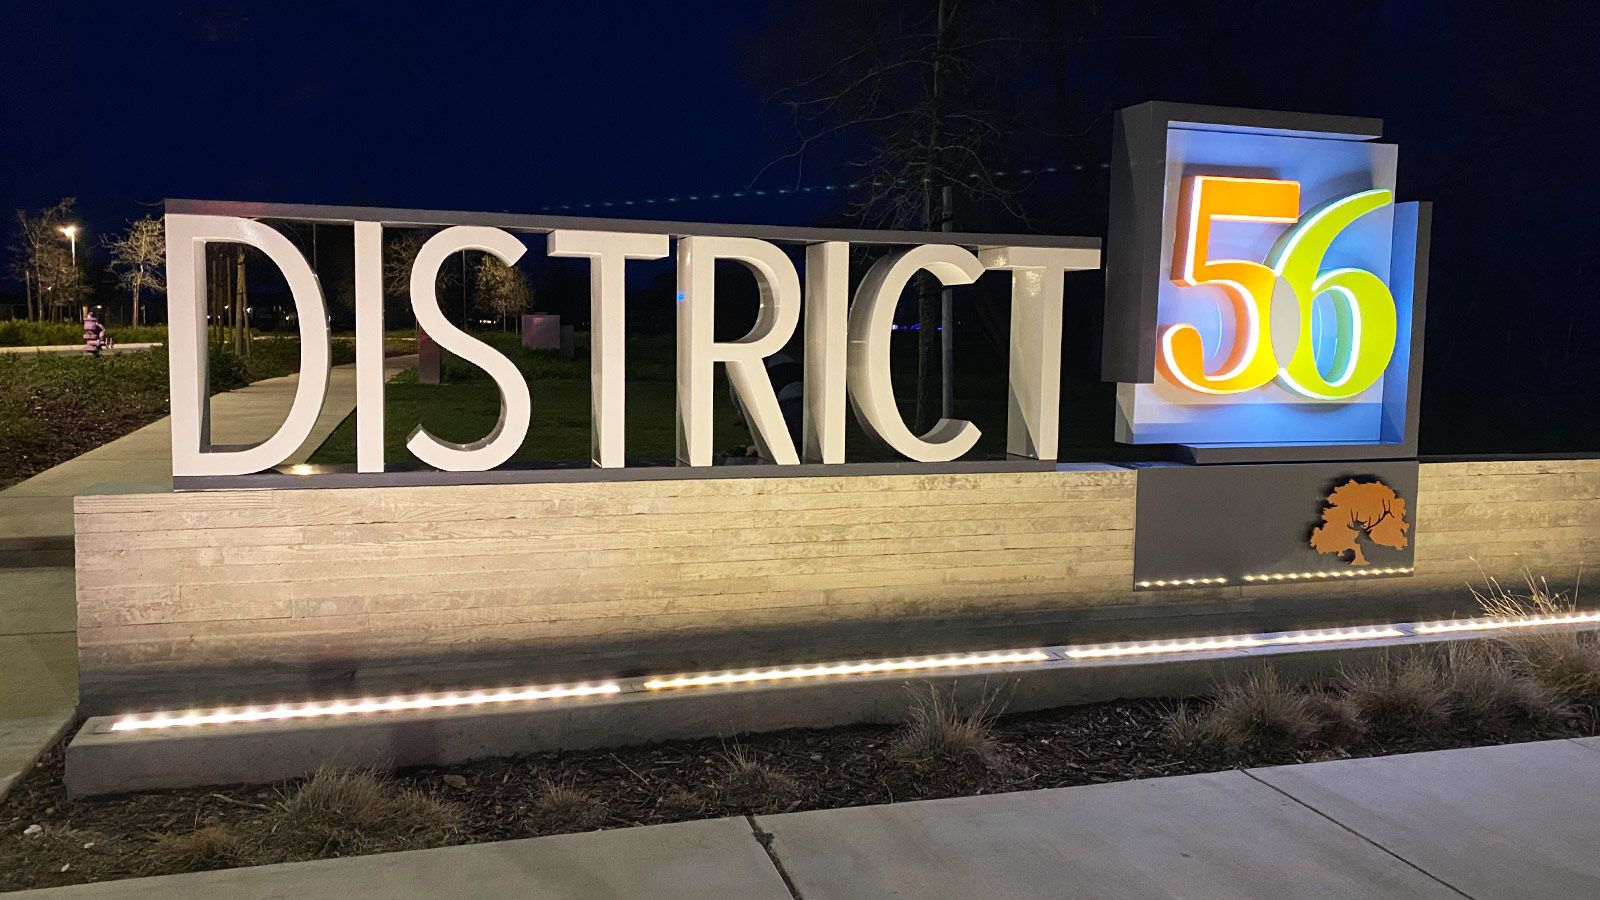 district56 illuminated monument sign